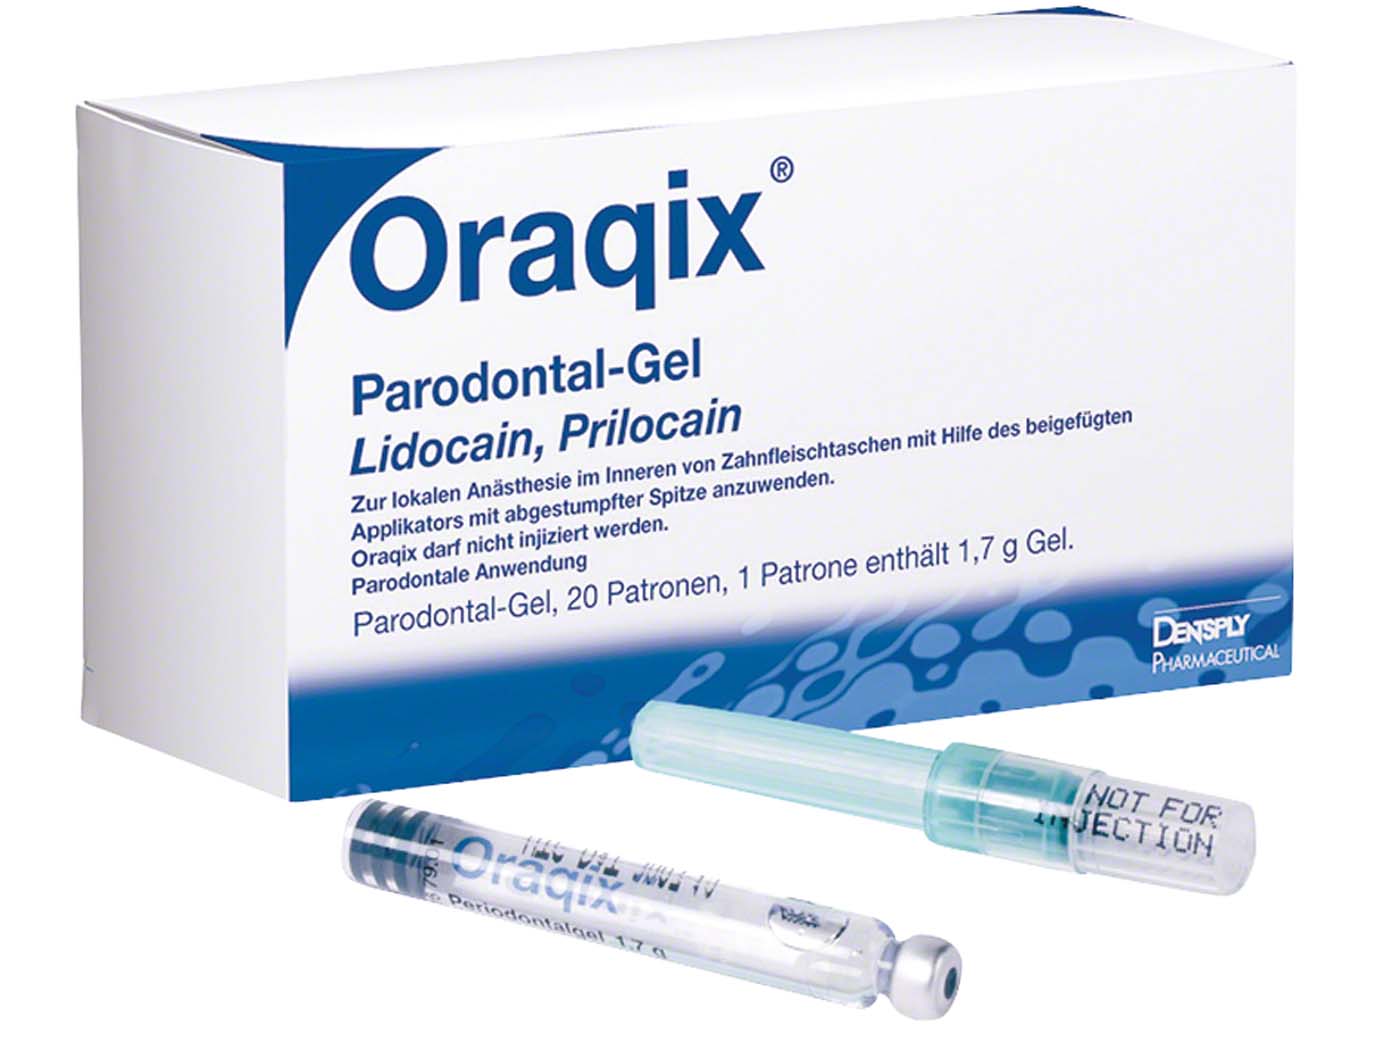 Oraqix® Lidocain und Prilocain Parodontal-Gel 2,5%/2,5% Dentsply Sirona